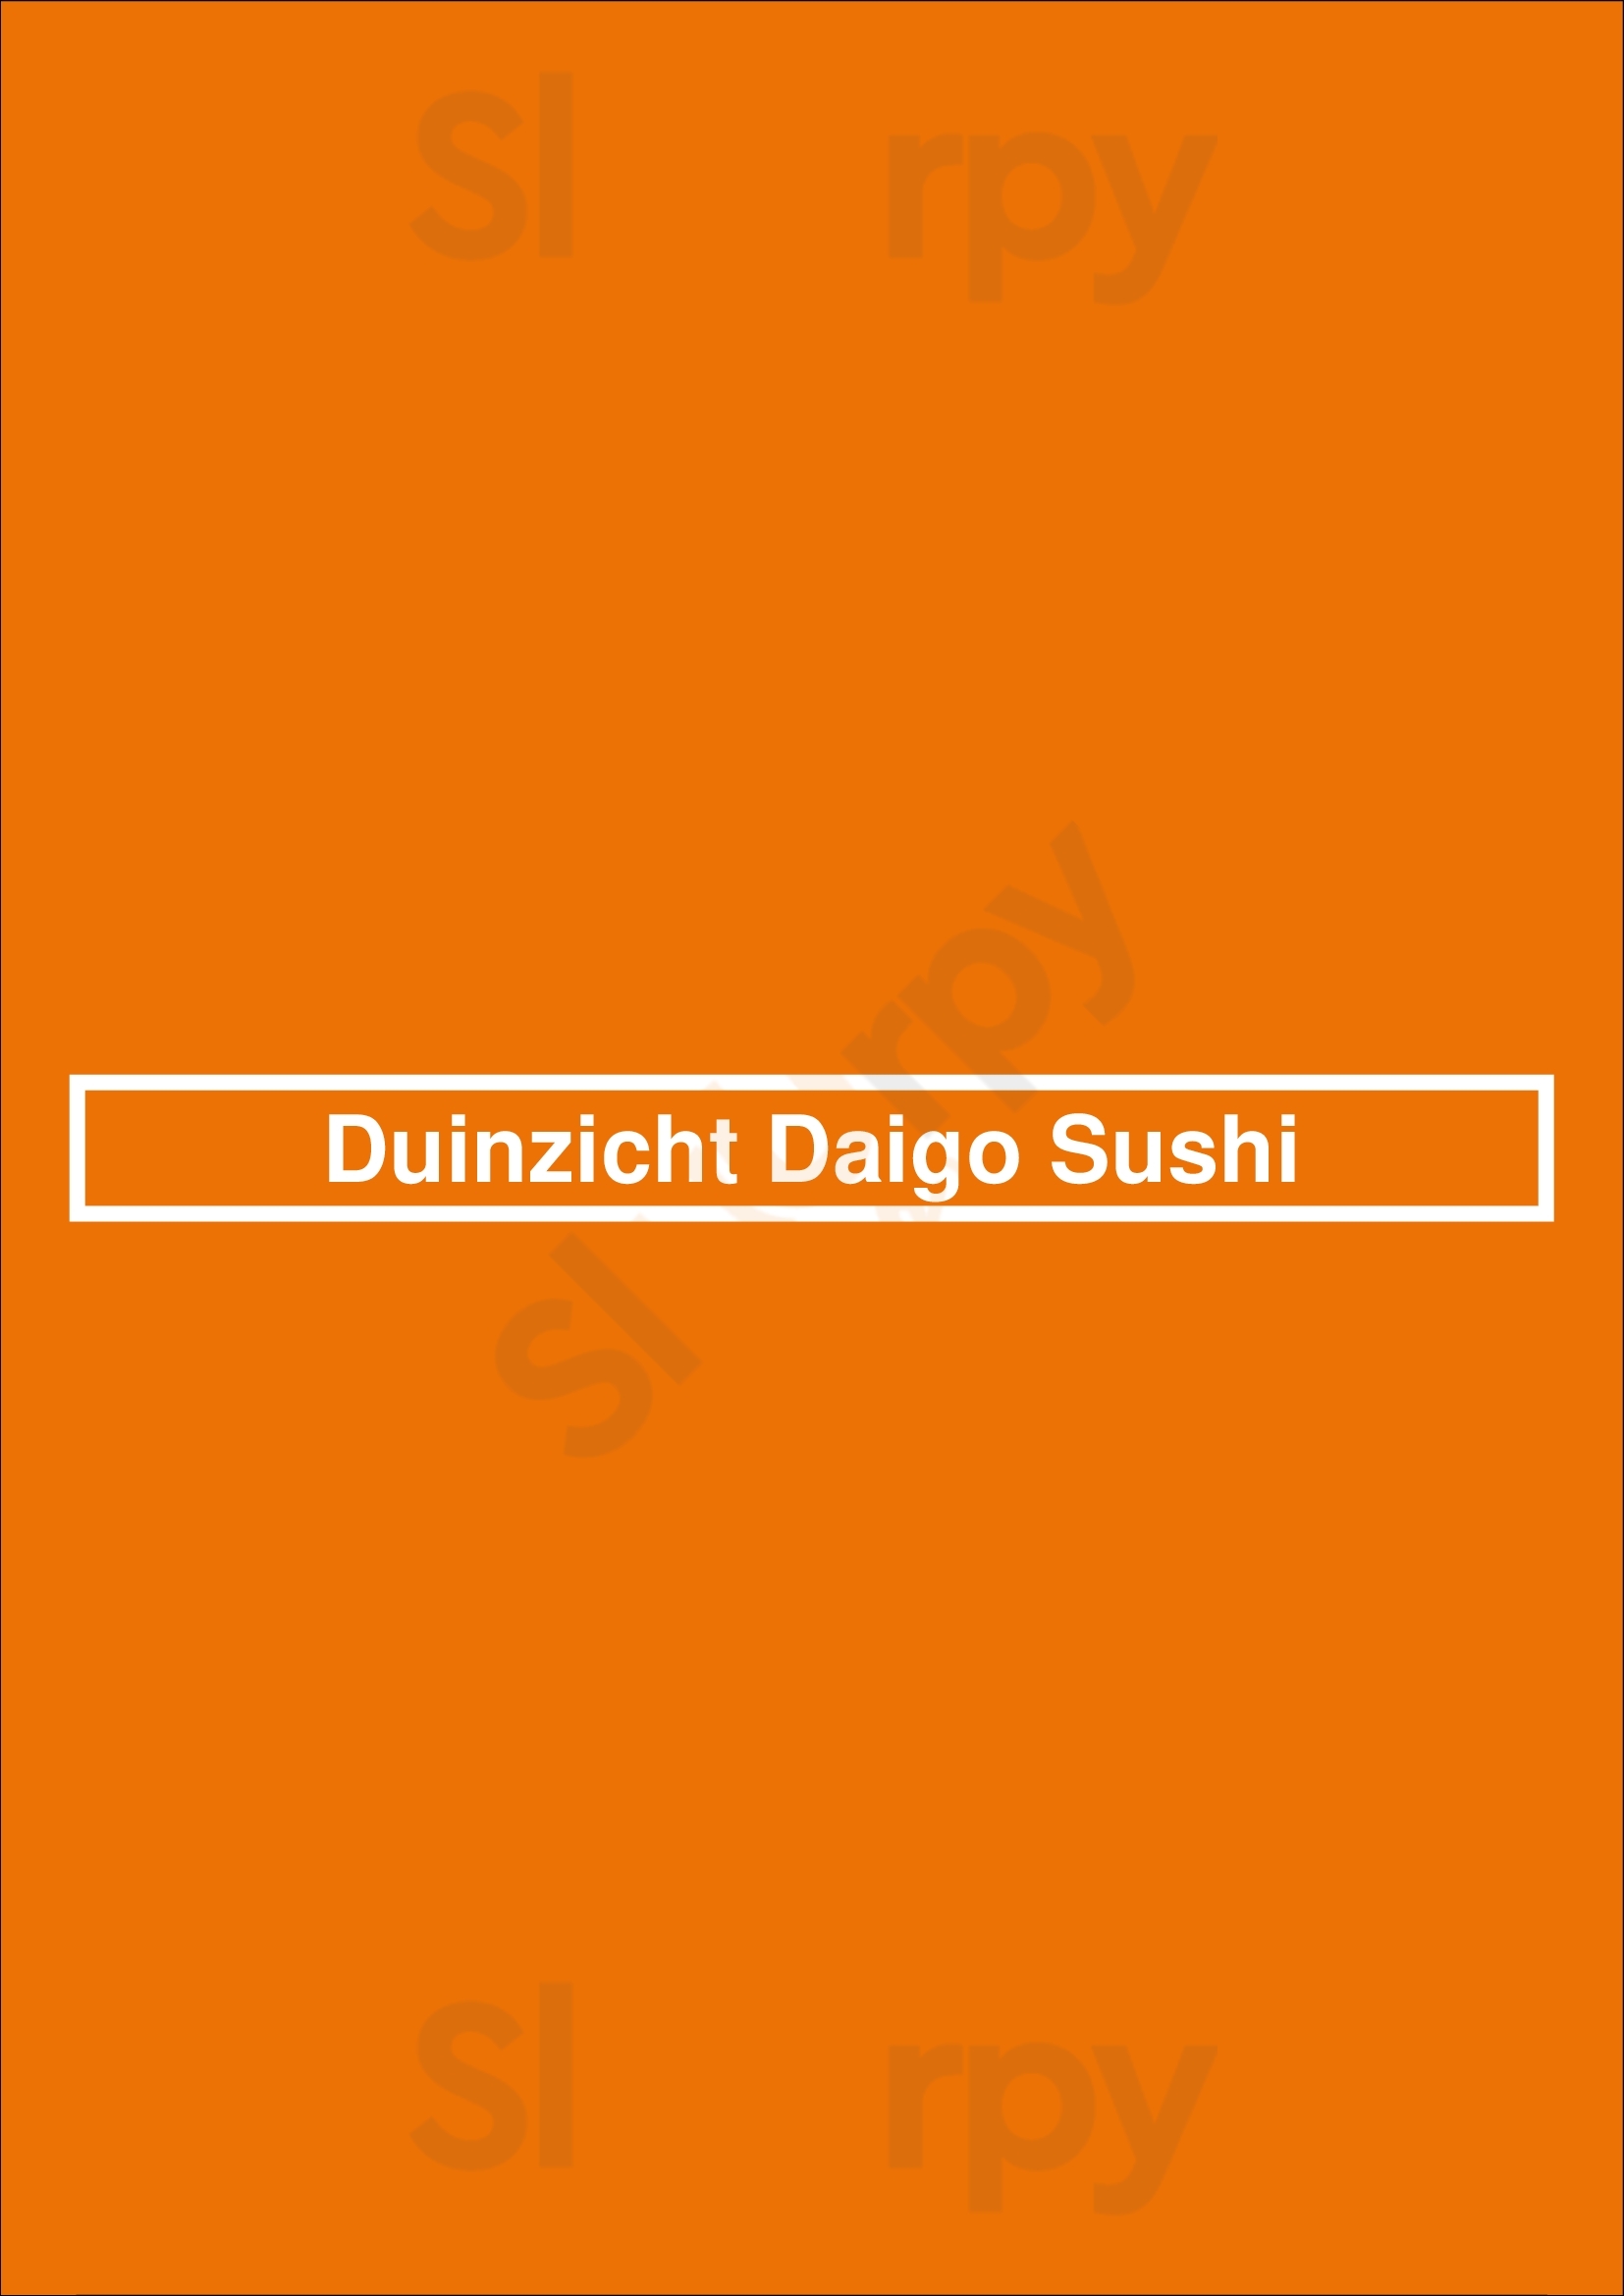 Duinzicht Daigo Sushi Knokke-Heist Menu - 1